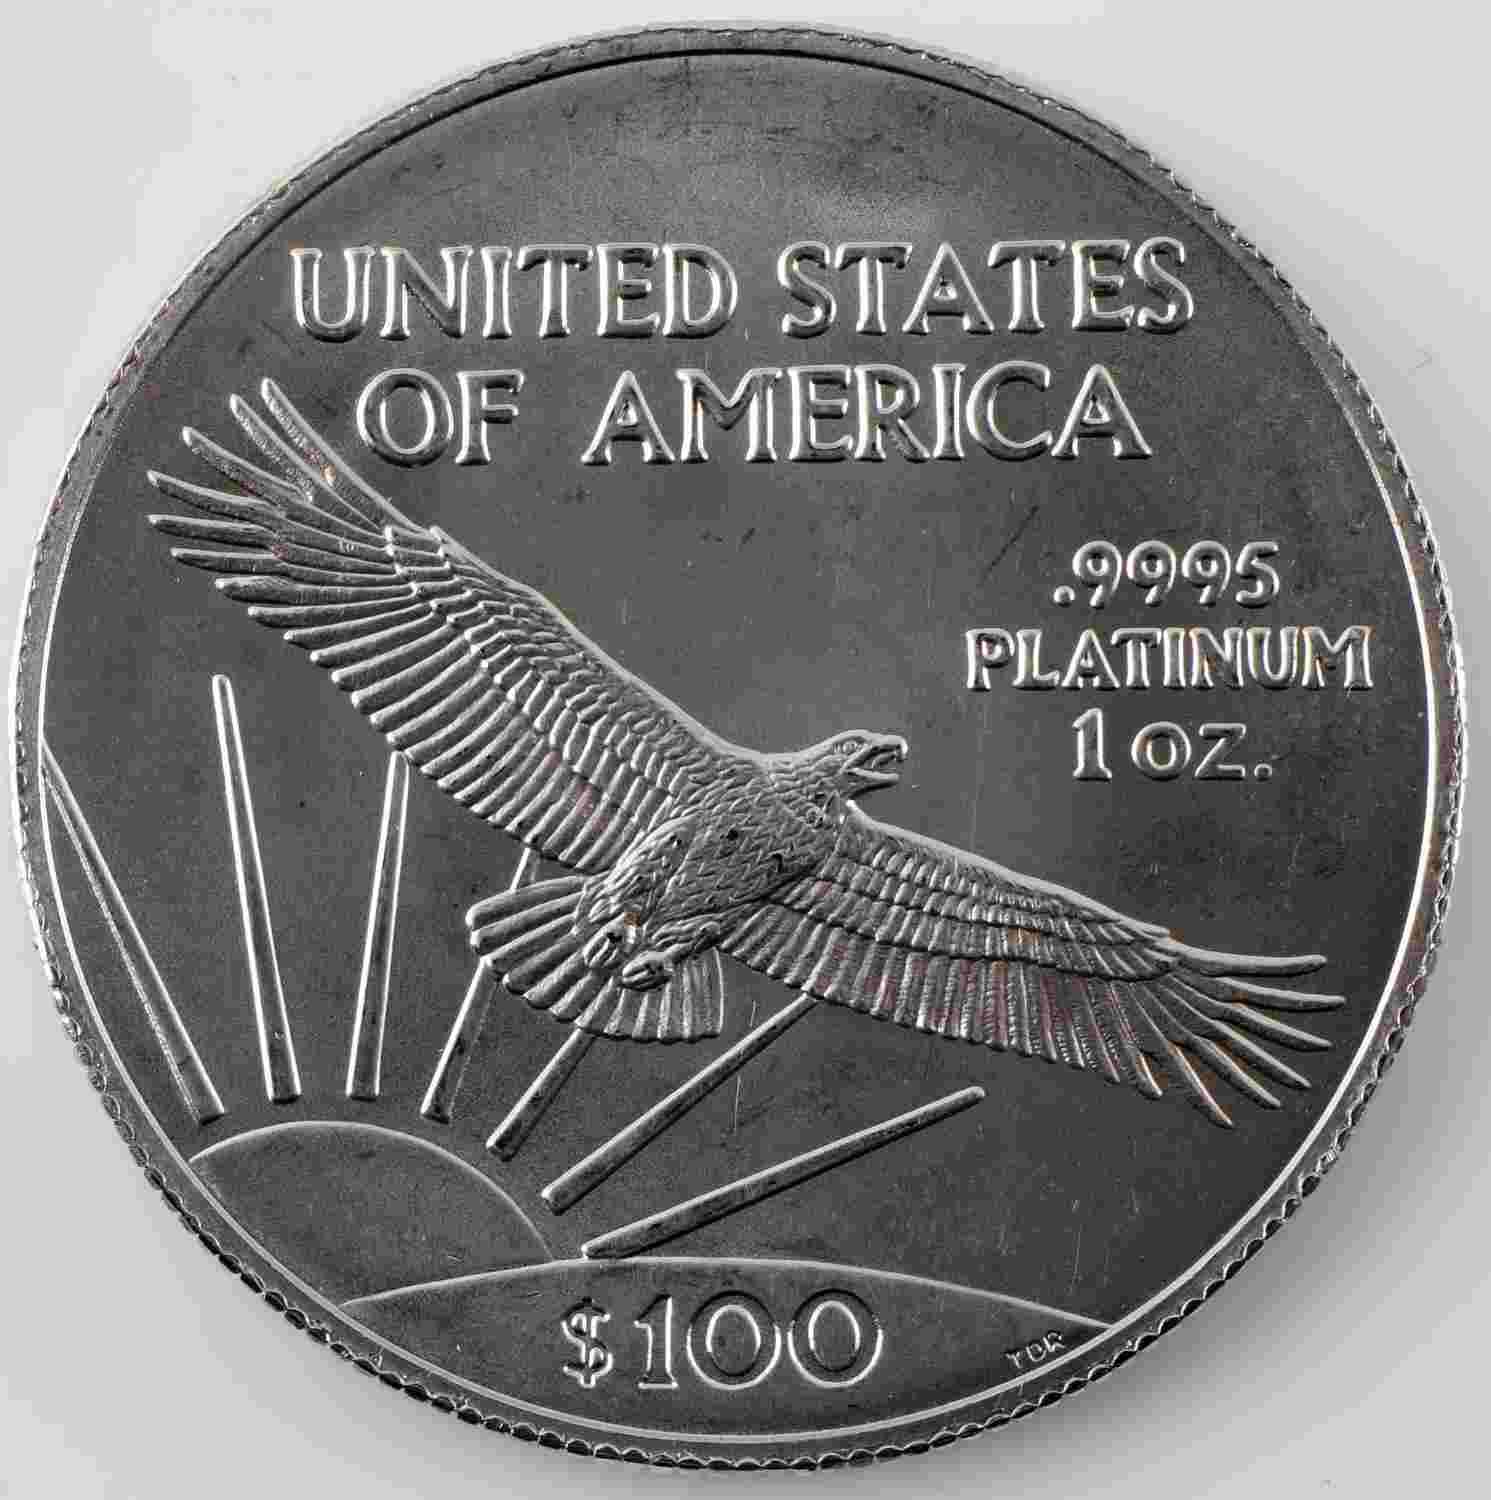 2014 PLATINUM $100 1 OZT AMREICAN EAGLE COIN